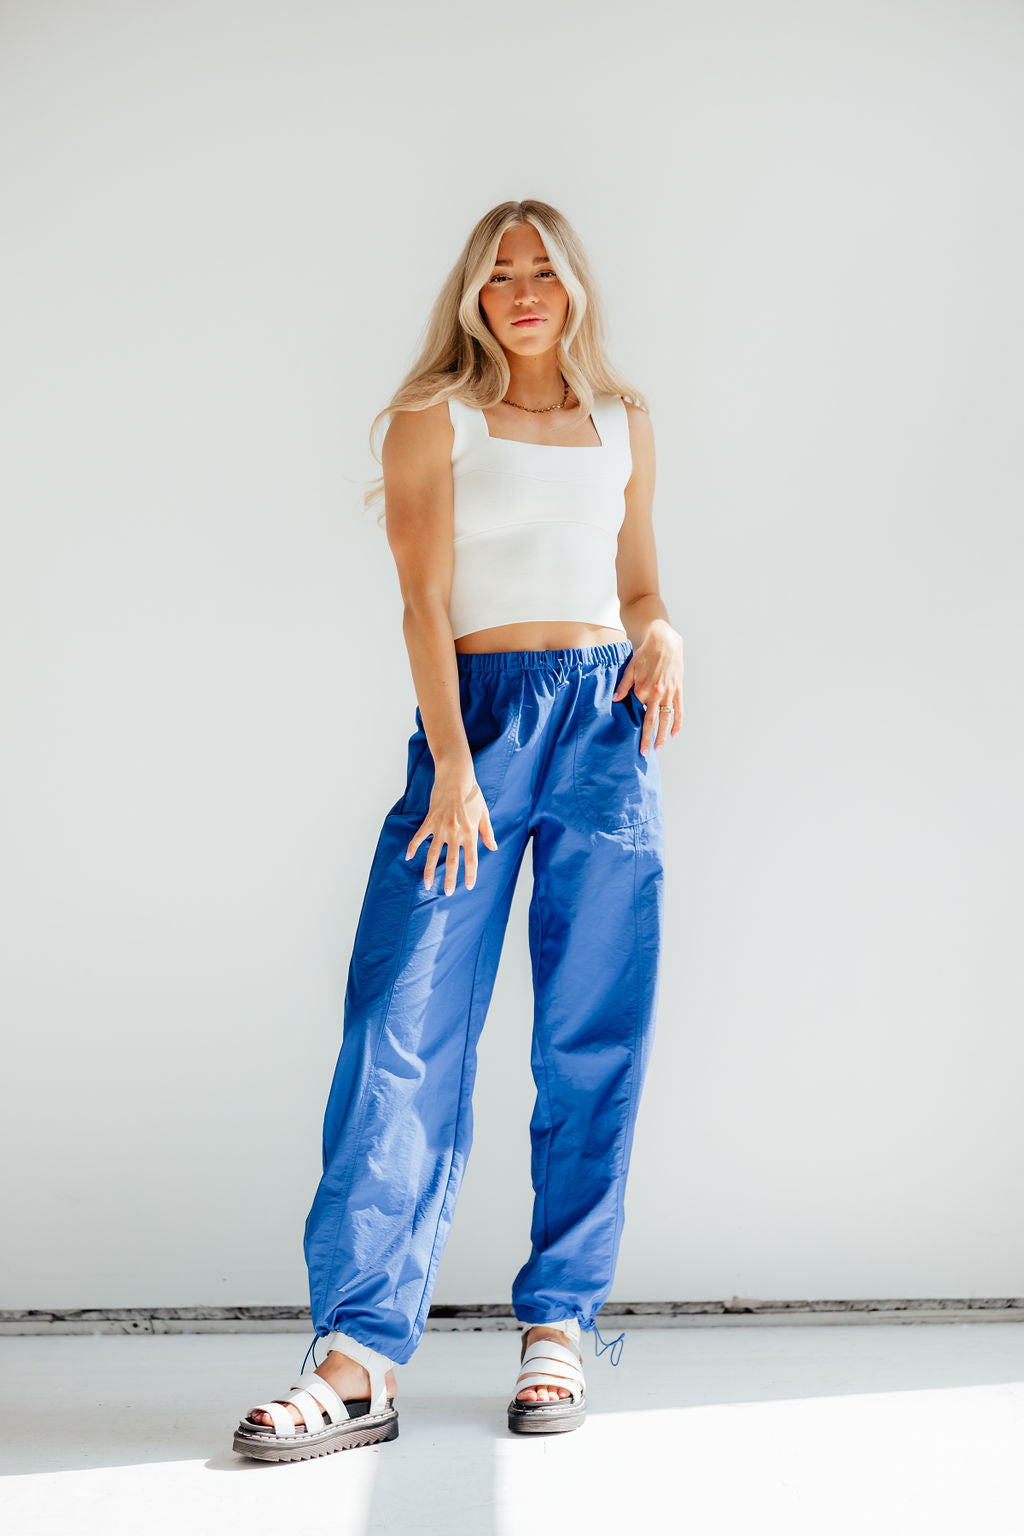 Lizo.eg, Royal blue parachute pants are now available 💙